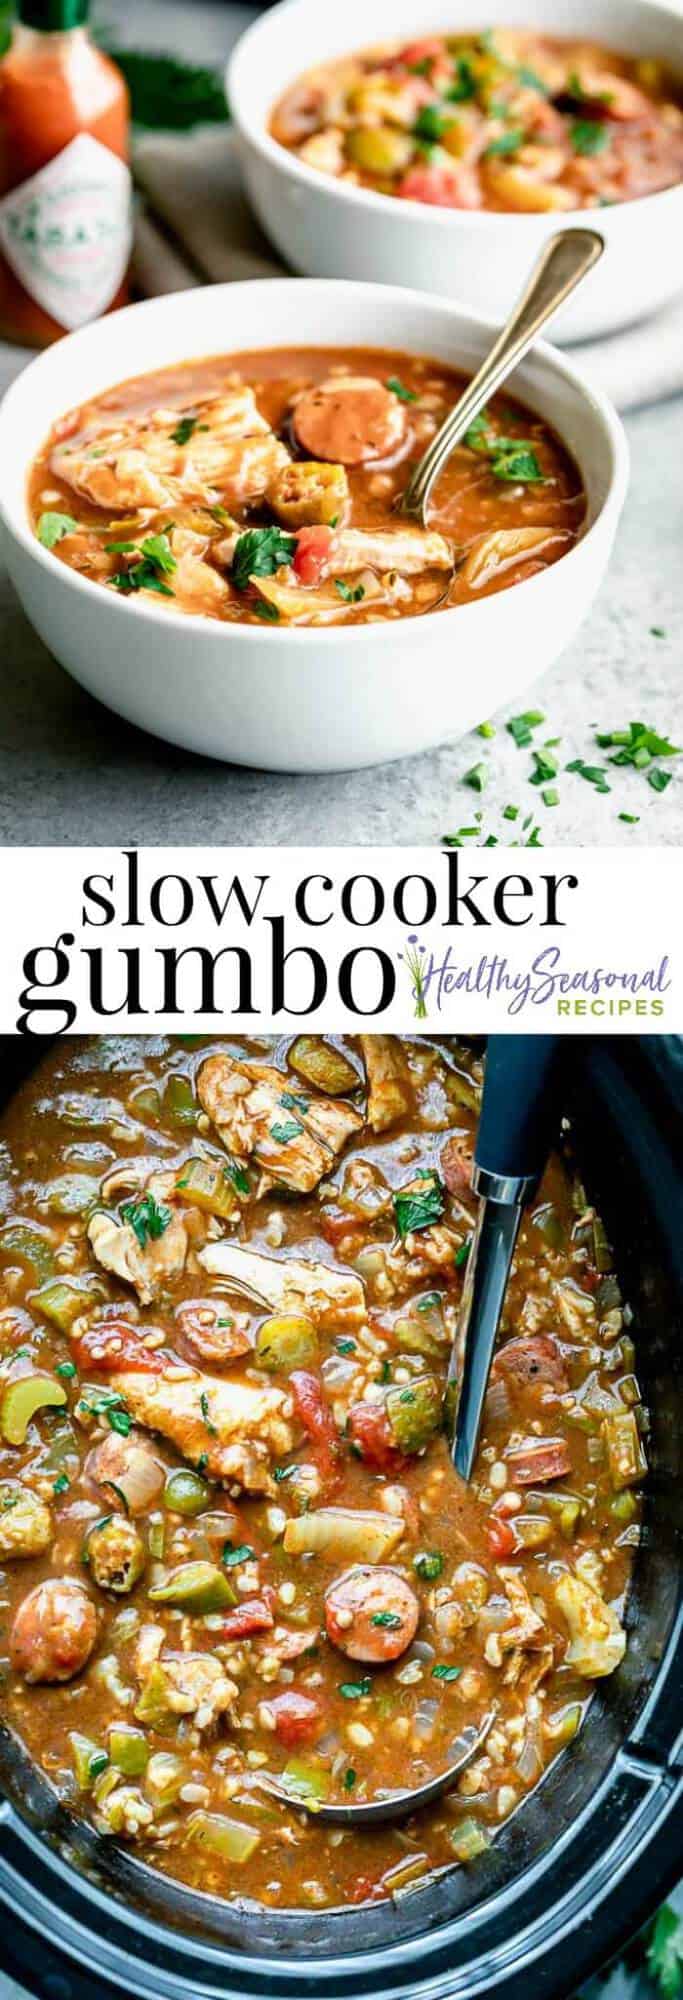 Crockpot Chicken Gumbo – Healthy Seasonal Recipes